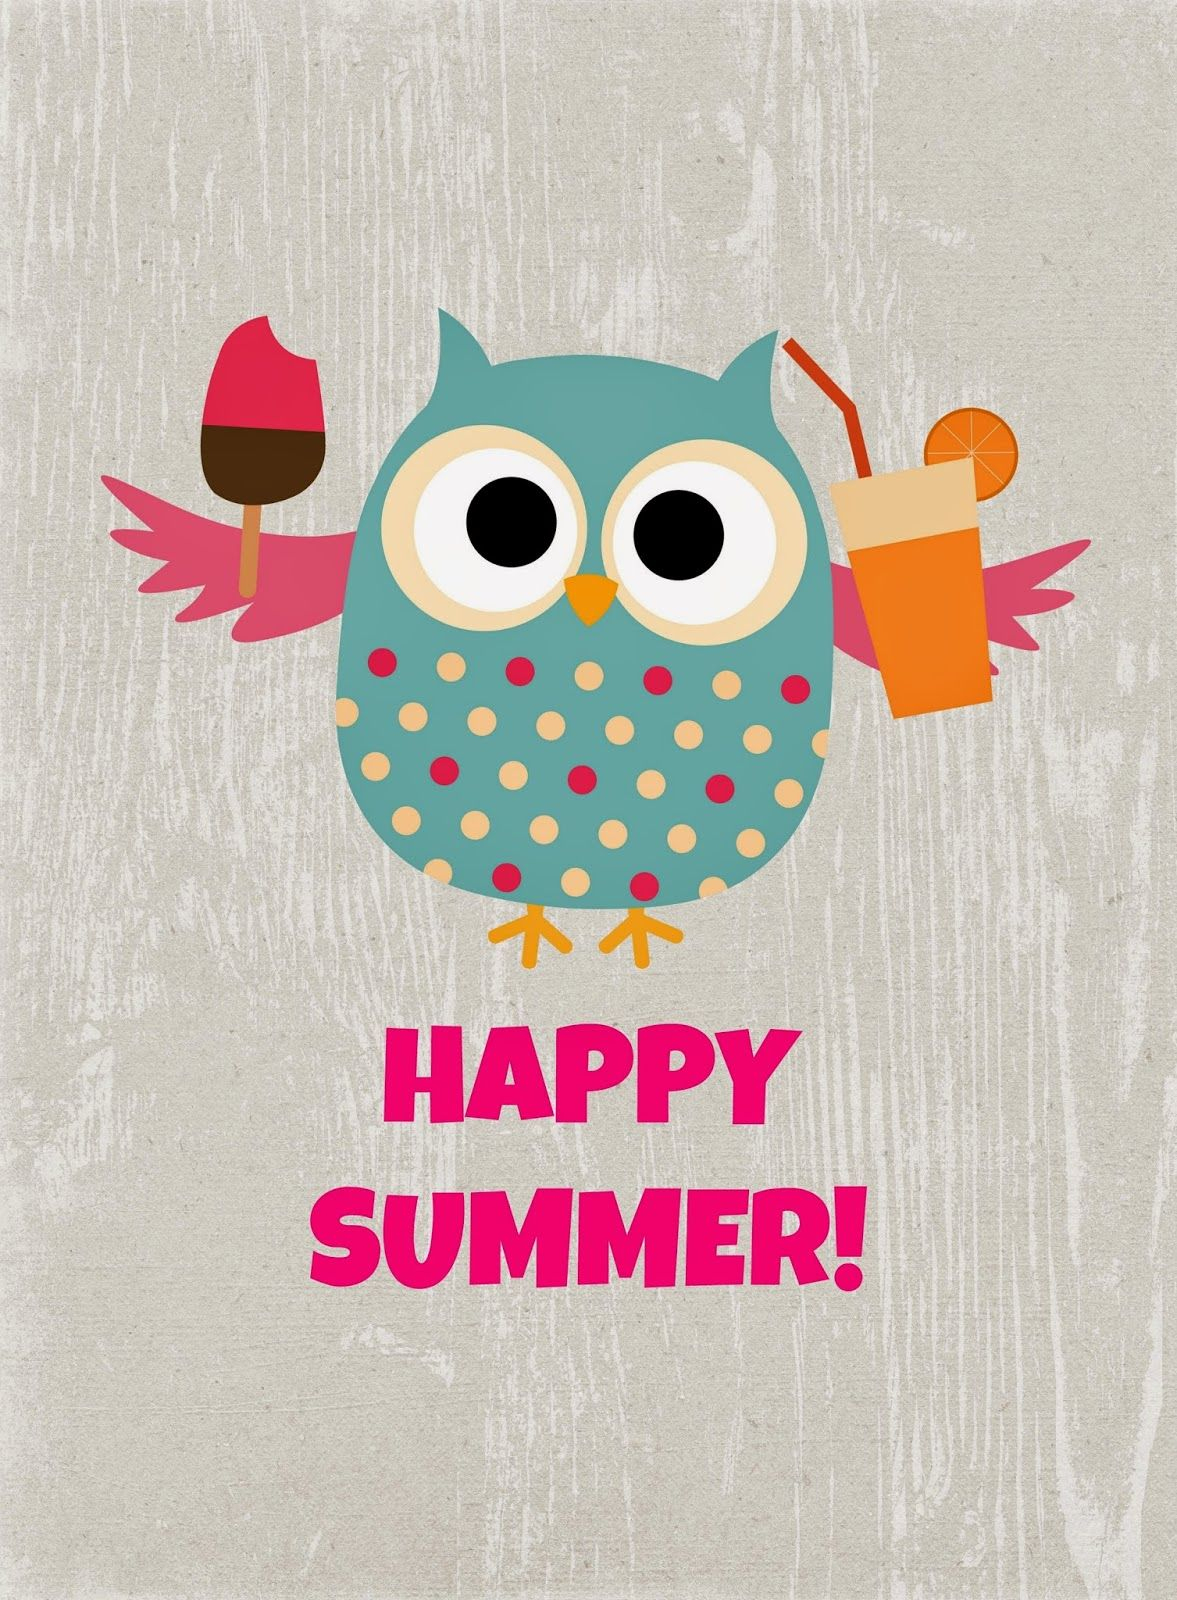 Free Summer Printables | Scrapbooking | Pinterest | Free Summer - Free Printable Summer Pictures